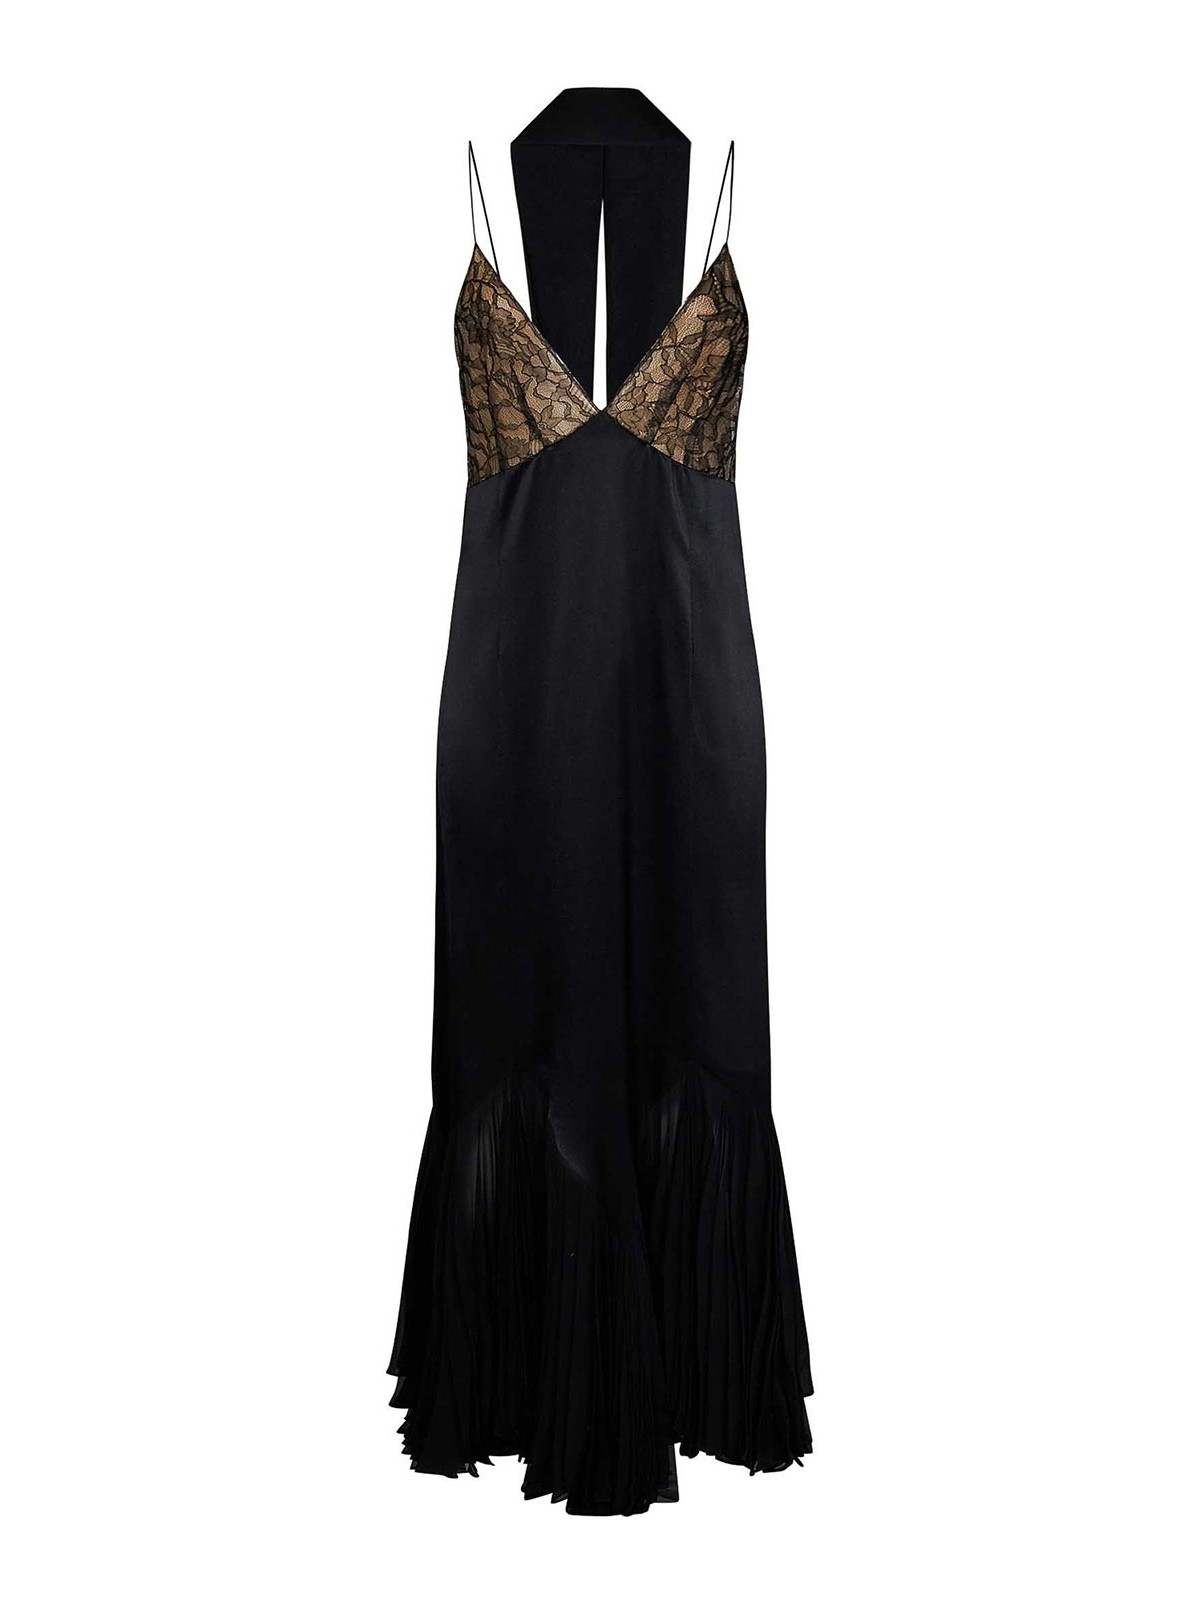 Khaite Black Silk Charmeuse Dress With Lace Bodice